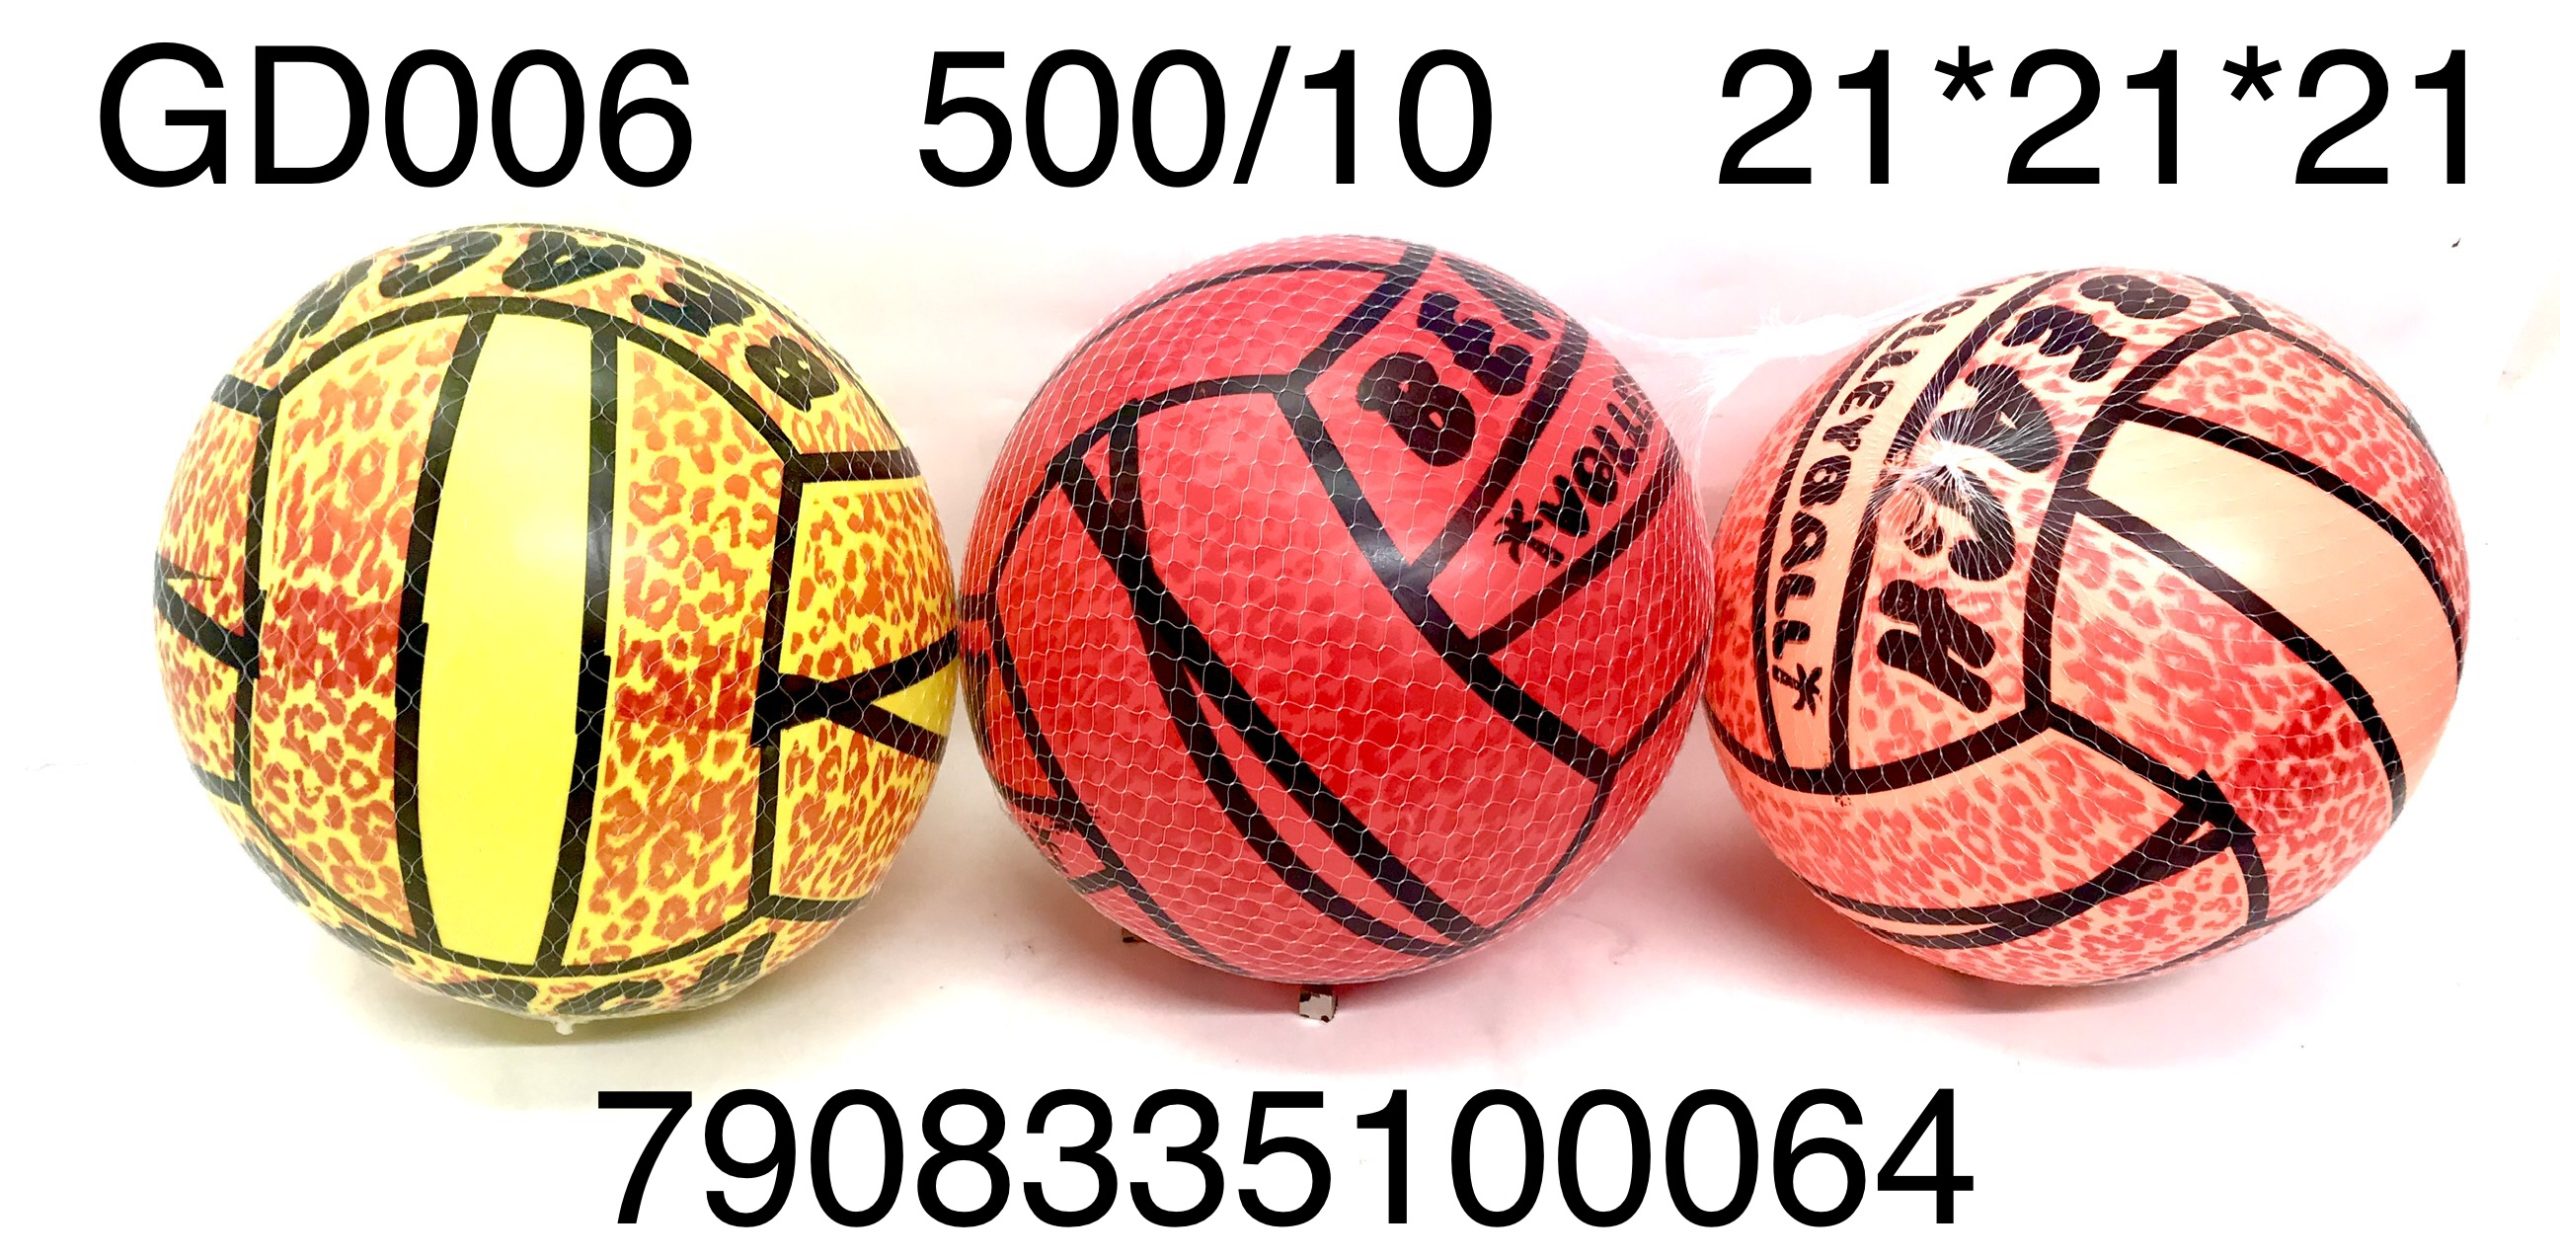 Мяч GD006 ПВХ д=20см - Бугульма 